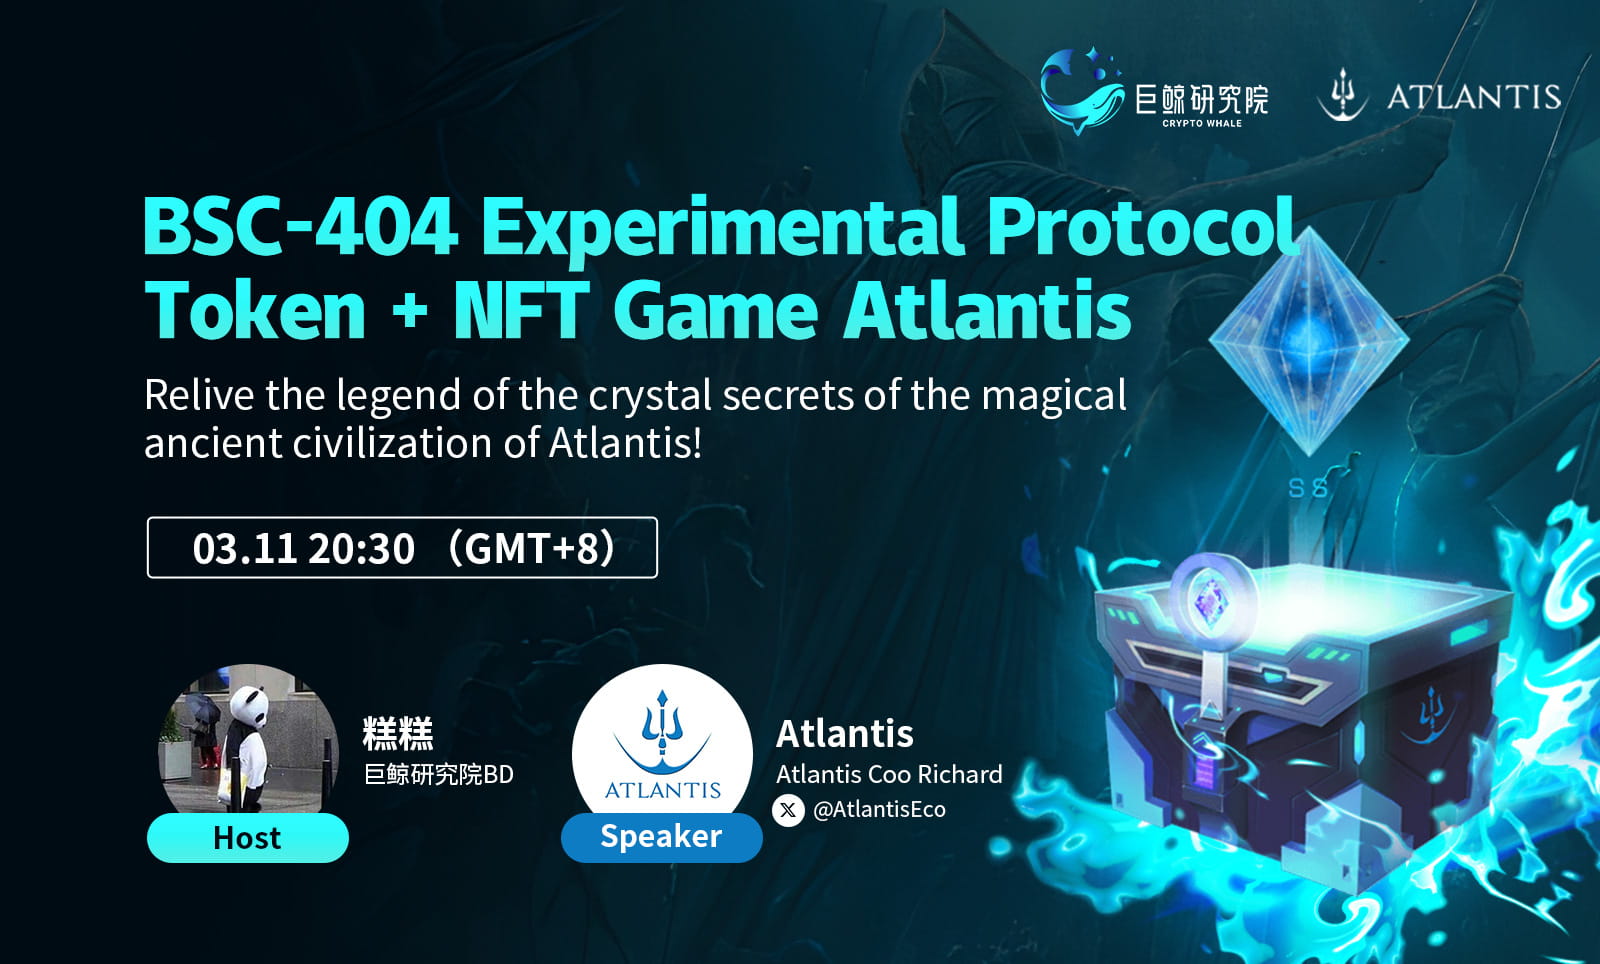 BSC-404 Experimental Protocol Token + NFT Game Atlantis